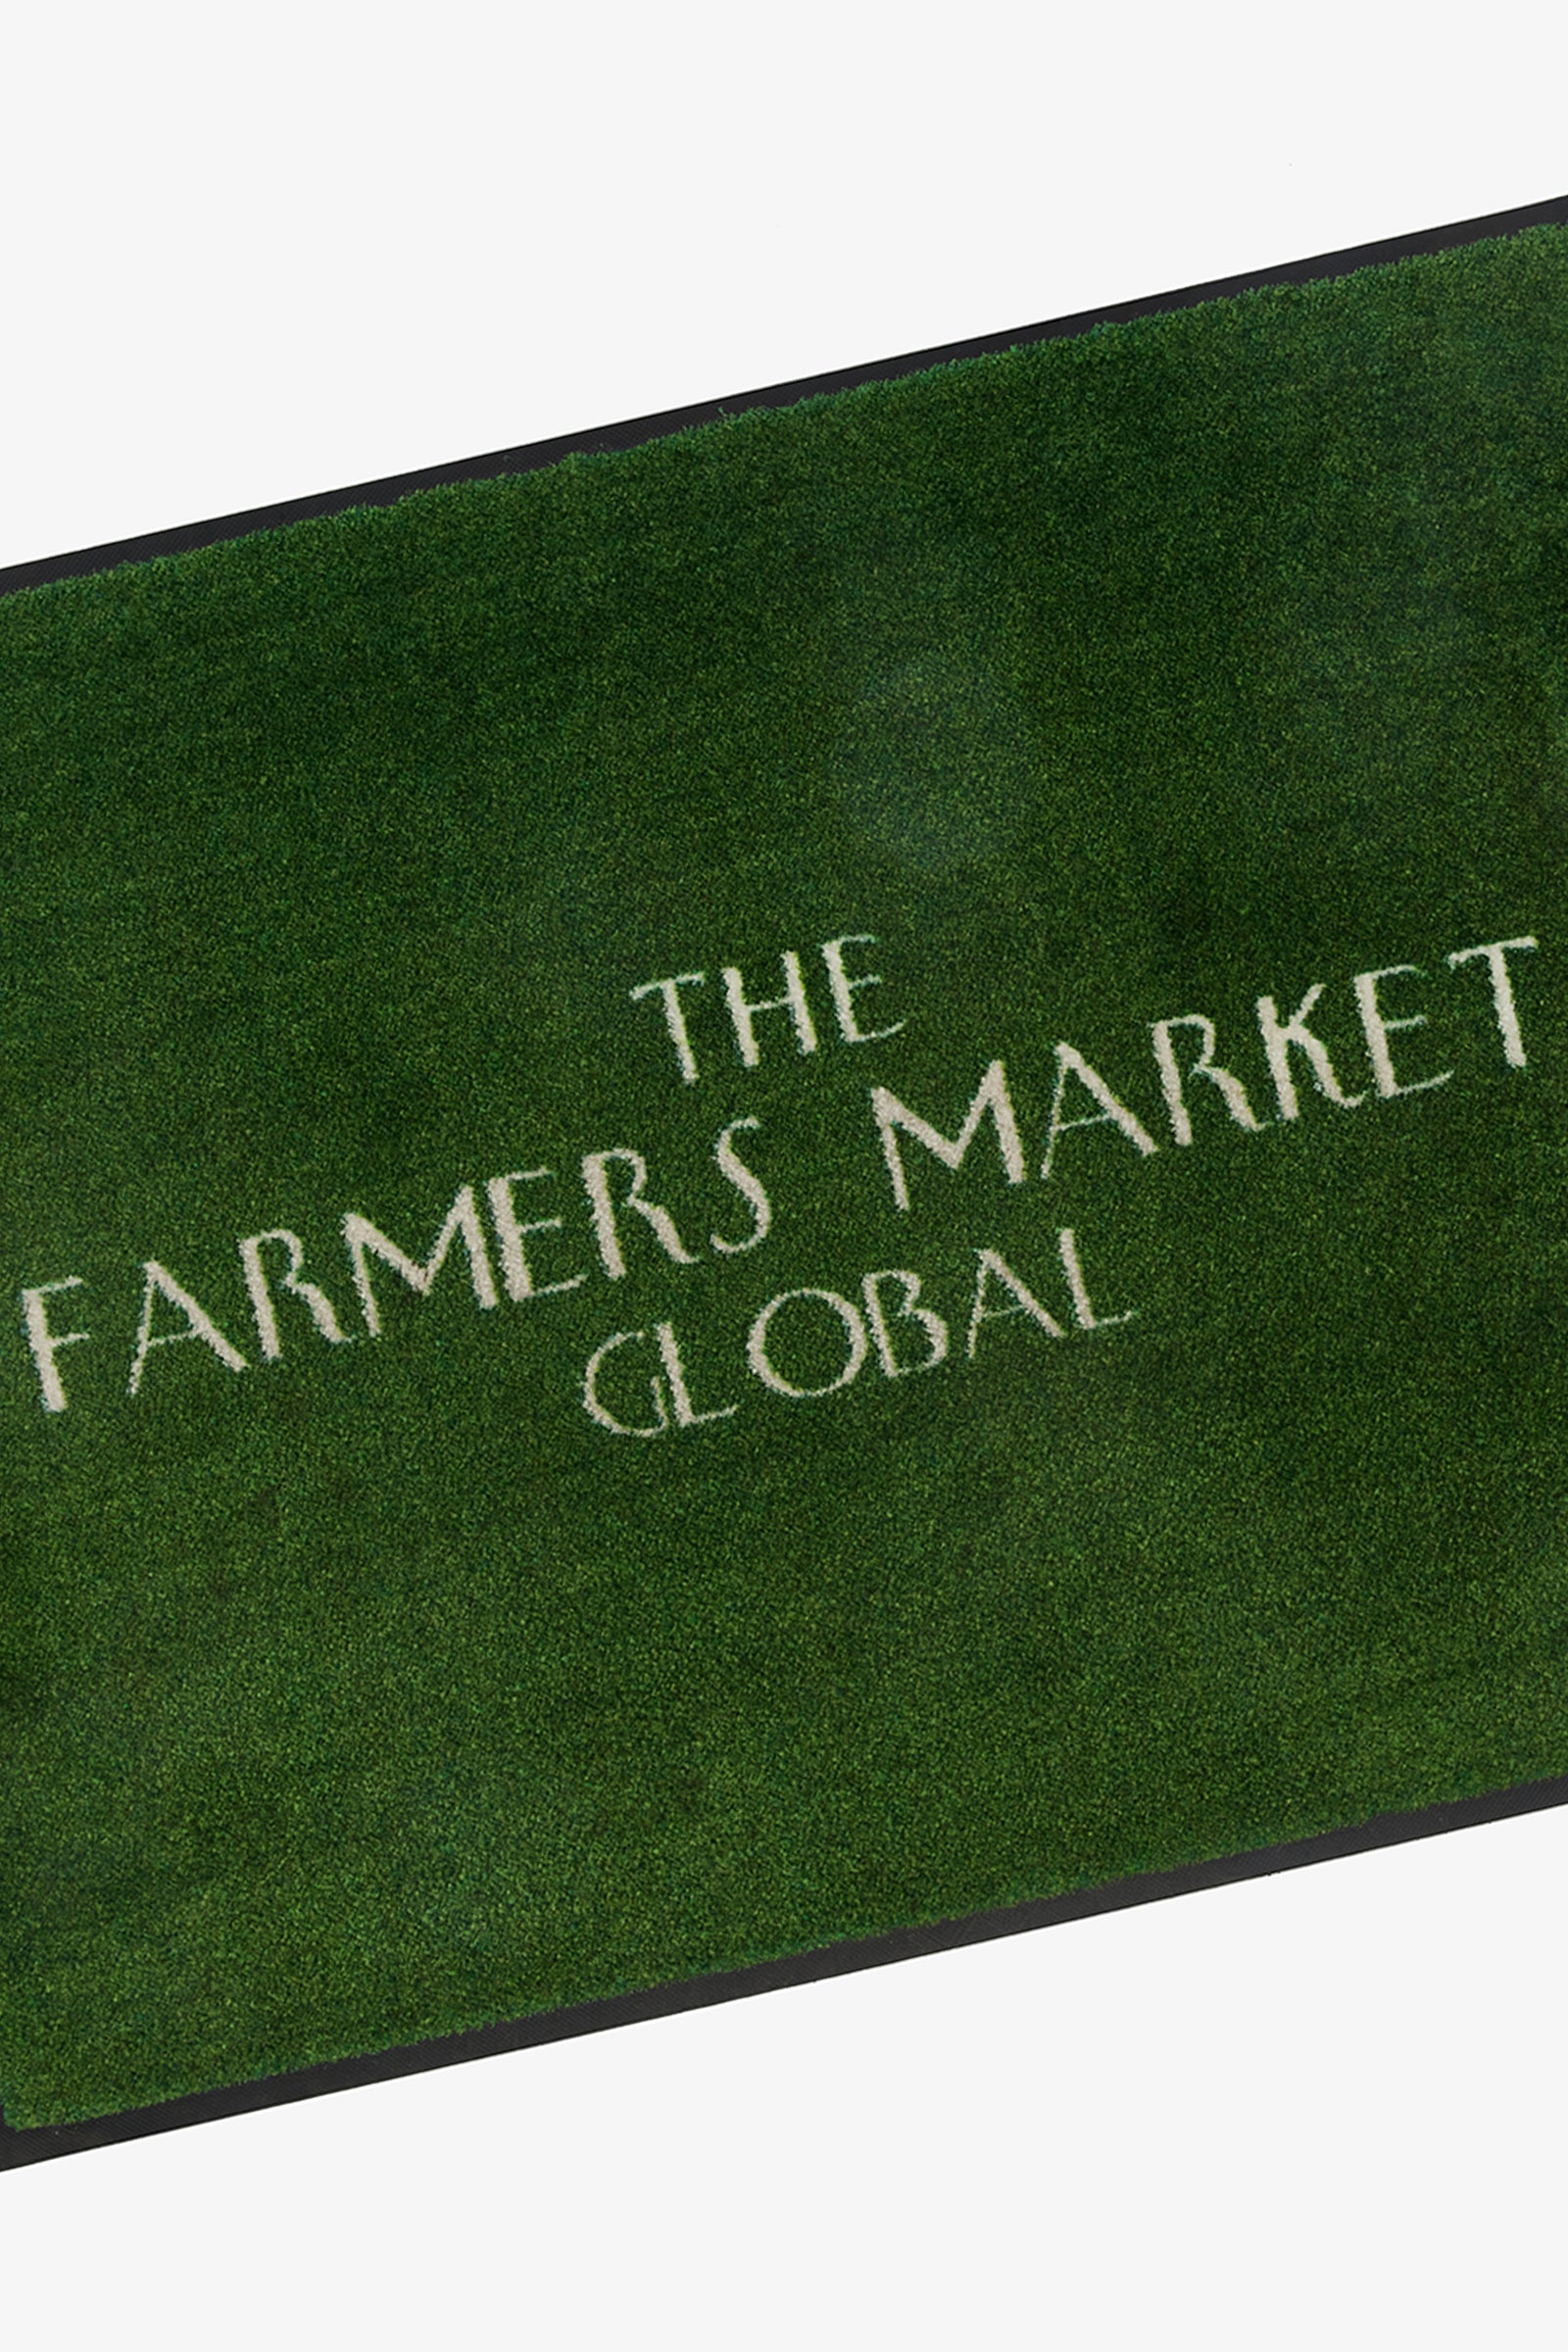 The Farmers Market Global Logo Woven Mat